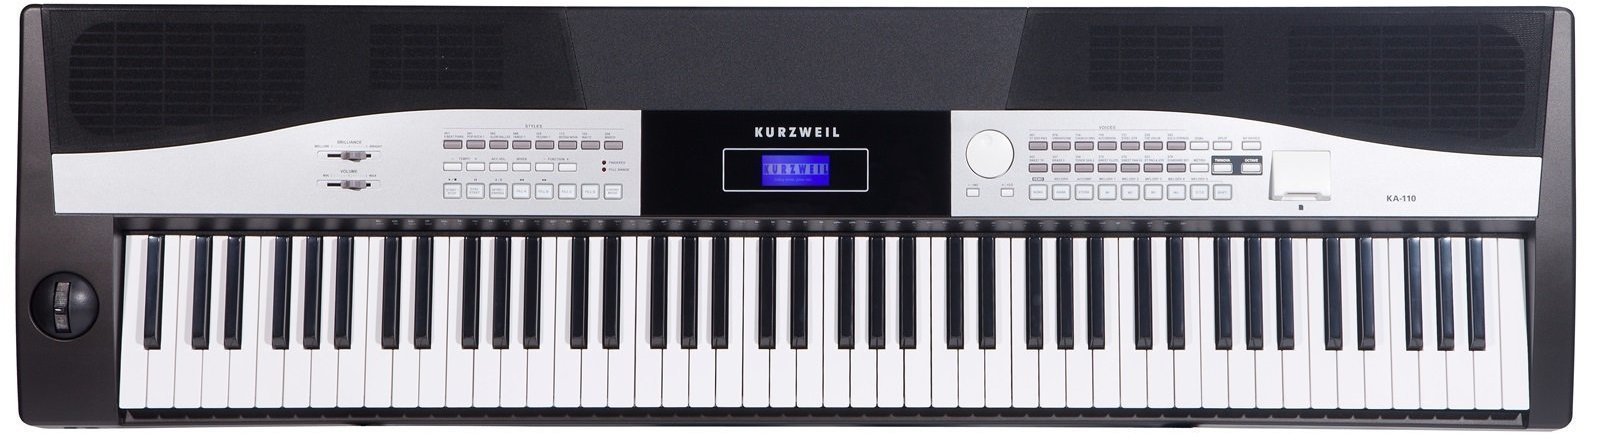 Piano de escenario digital Kurzweil KA110